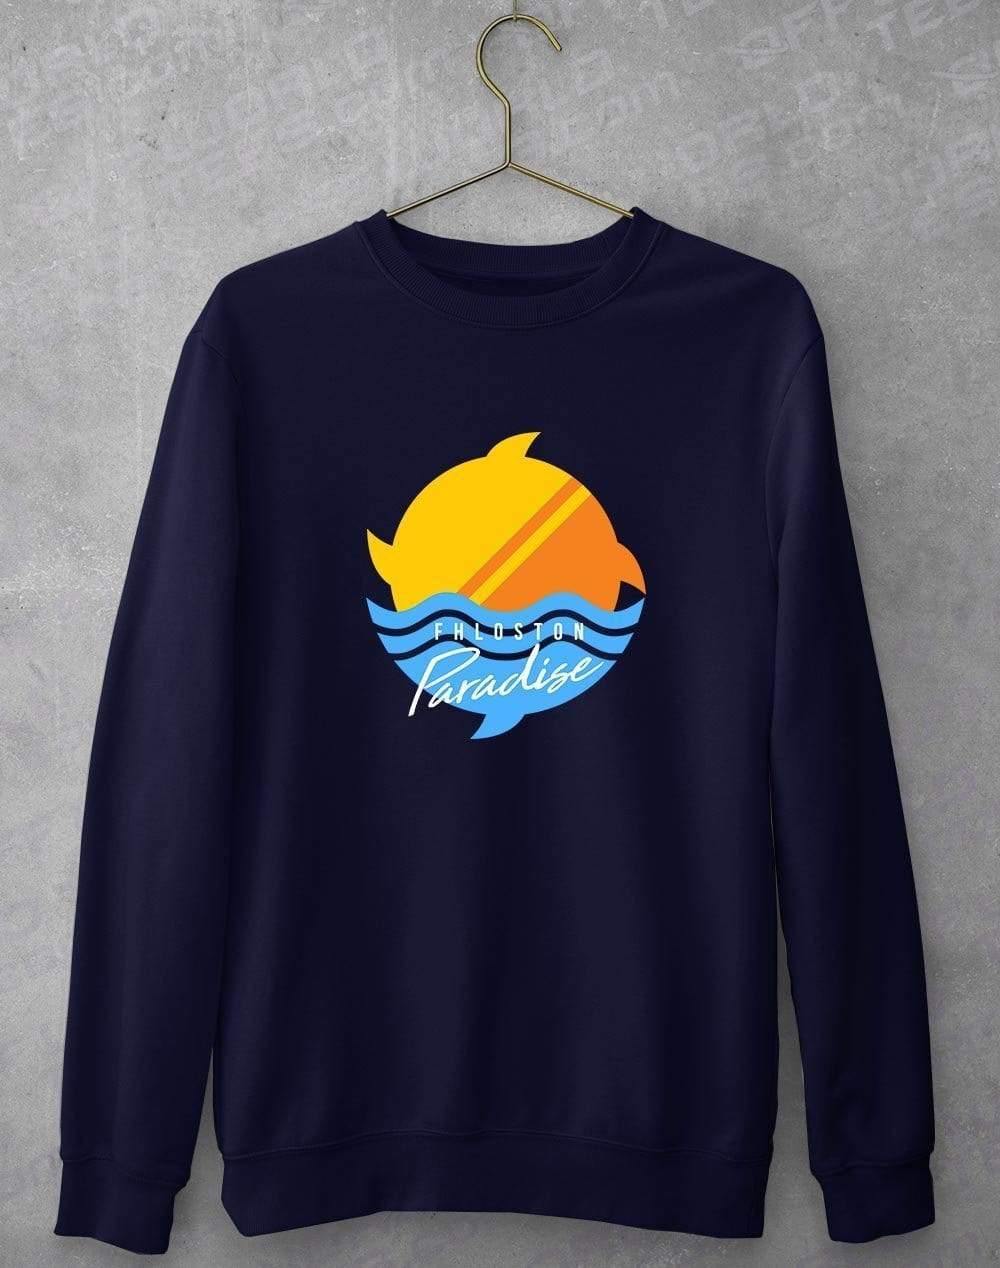 Fhloston Paradise Classic Sweatshirt S / Oxford Navy  - Off World Tees